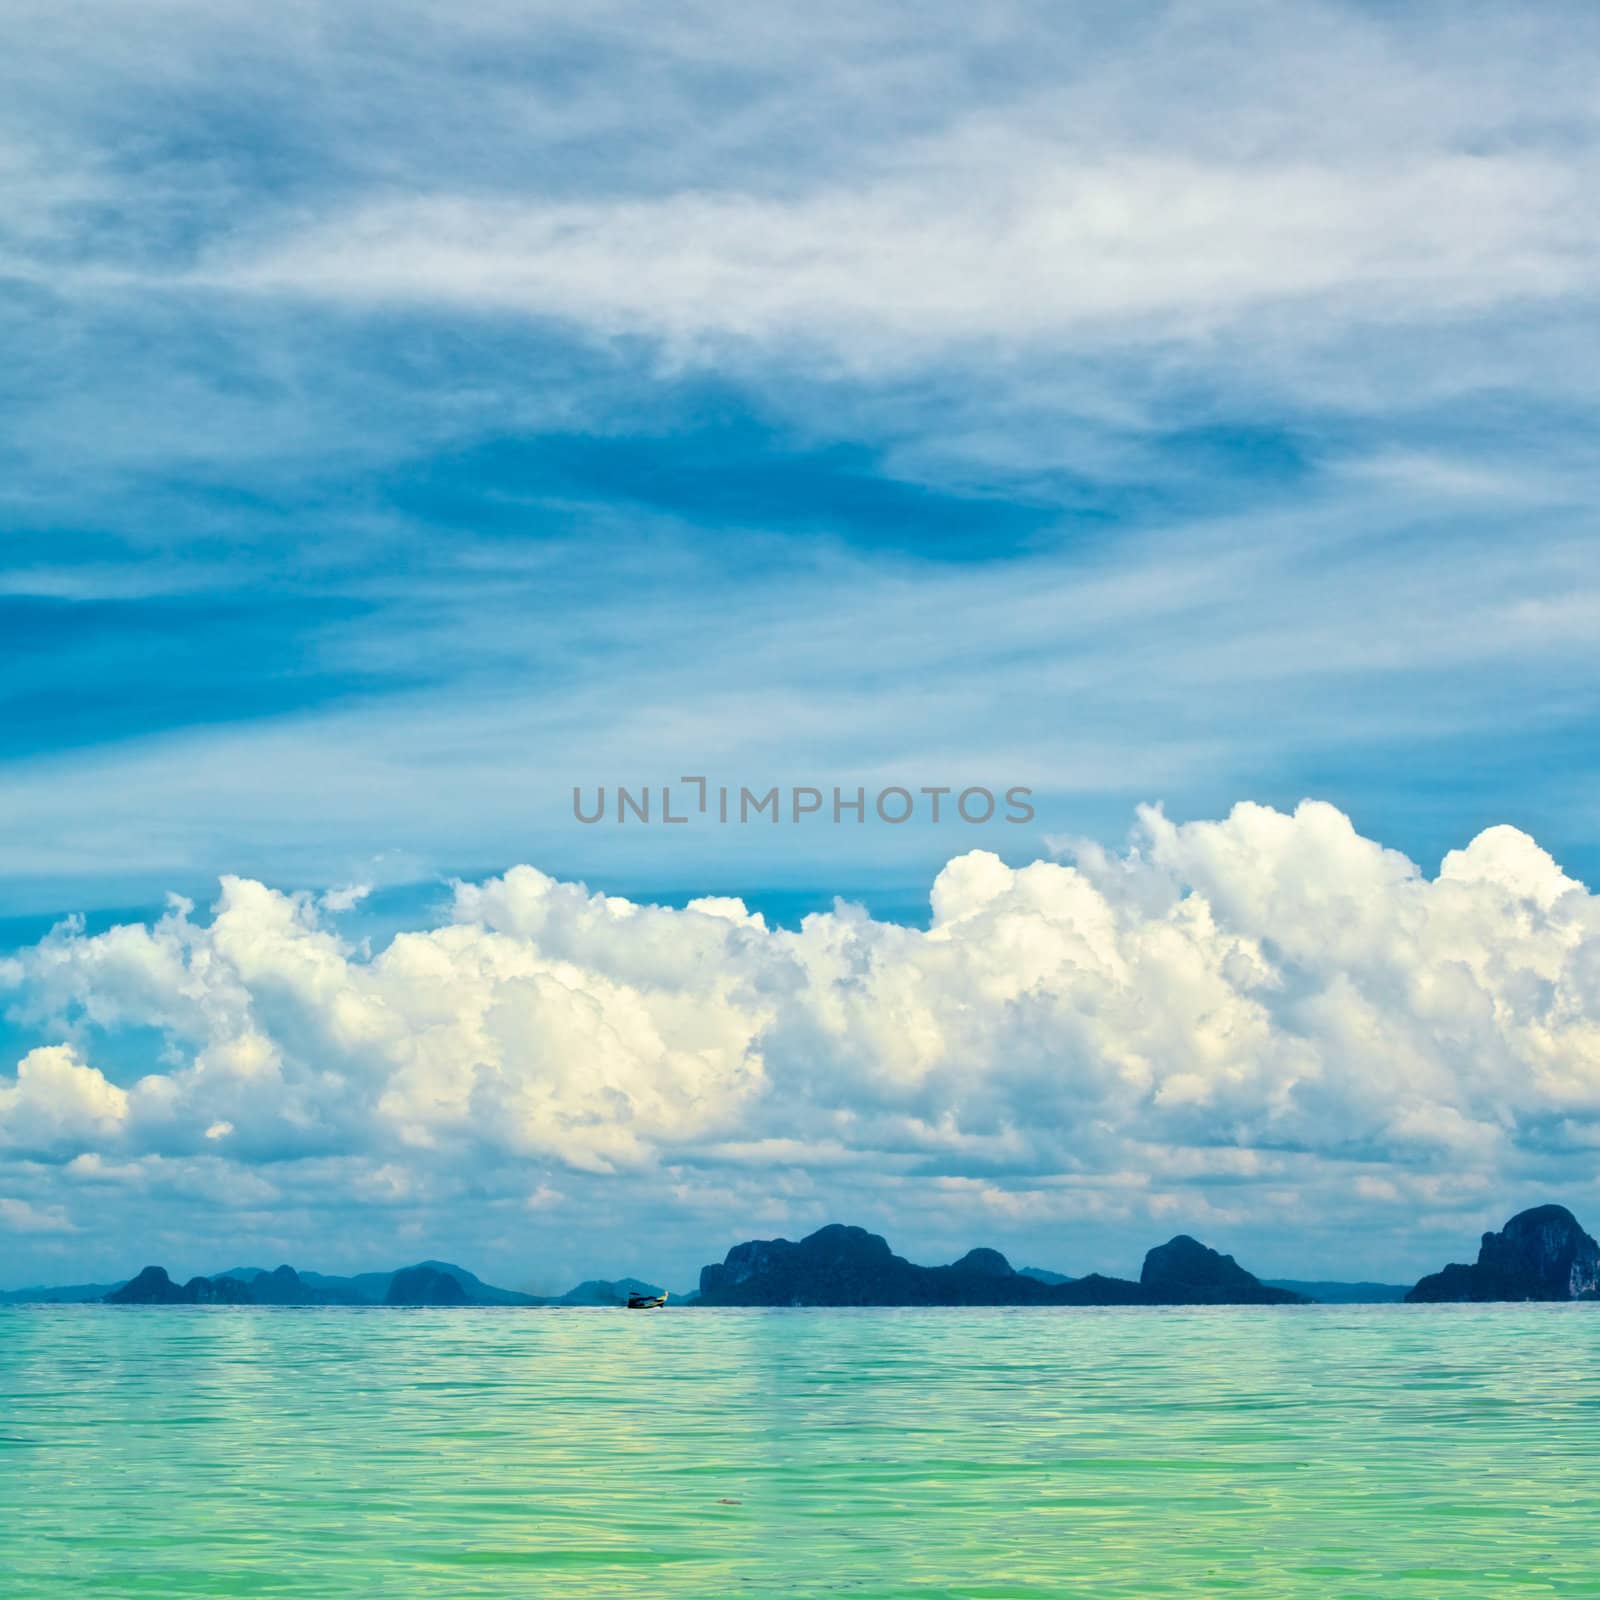 Andaman Seascape by petr_malyshev